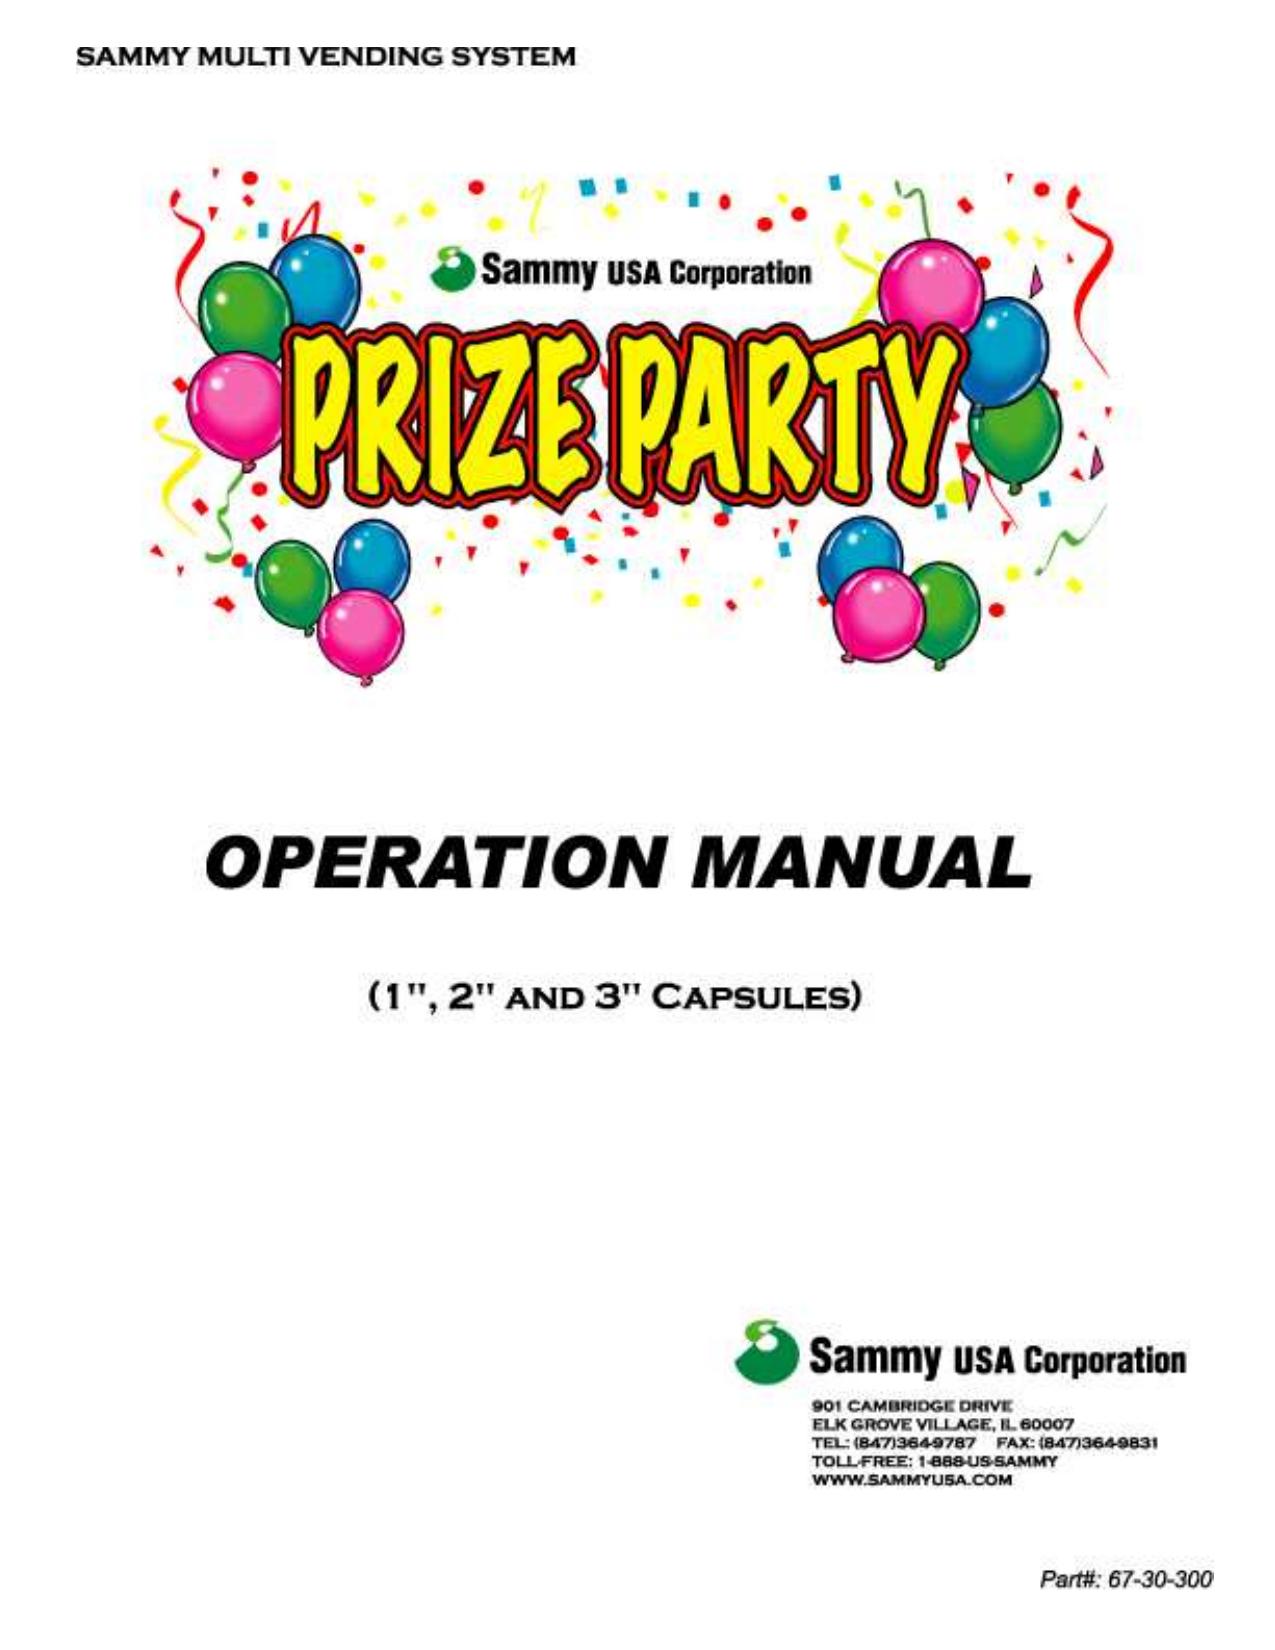 Prize party Manual 8 heads unit